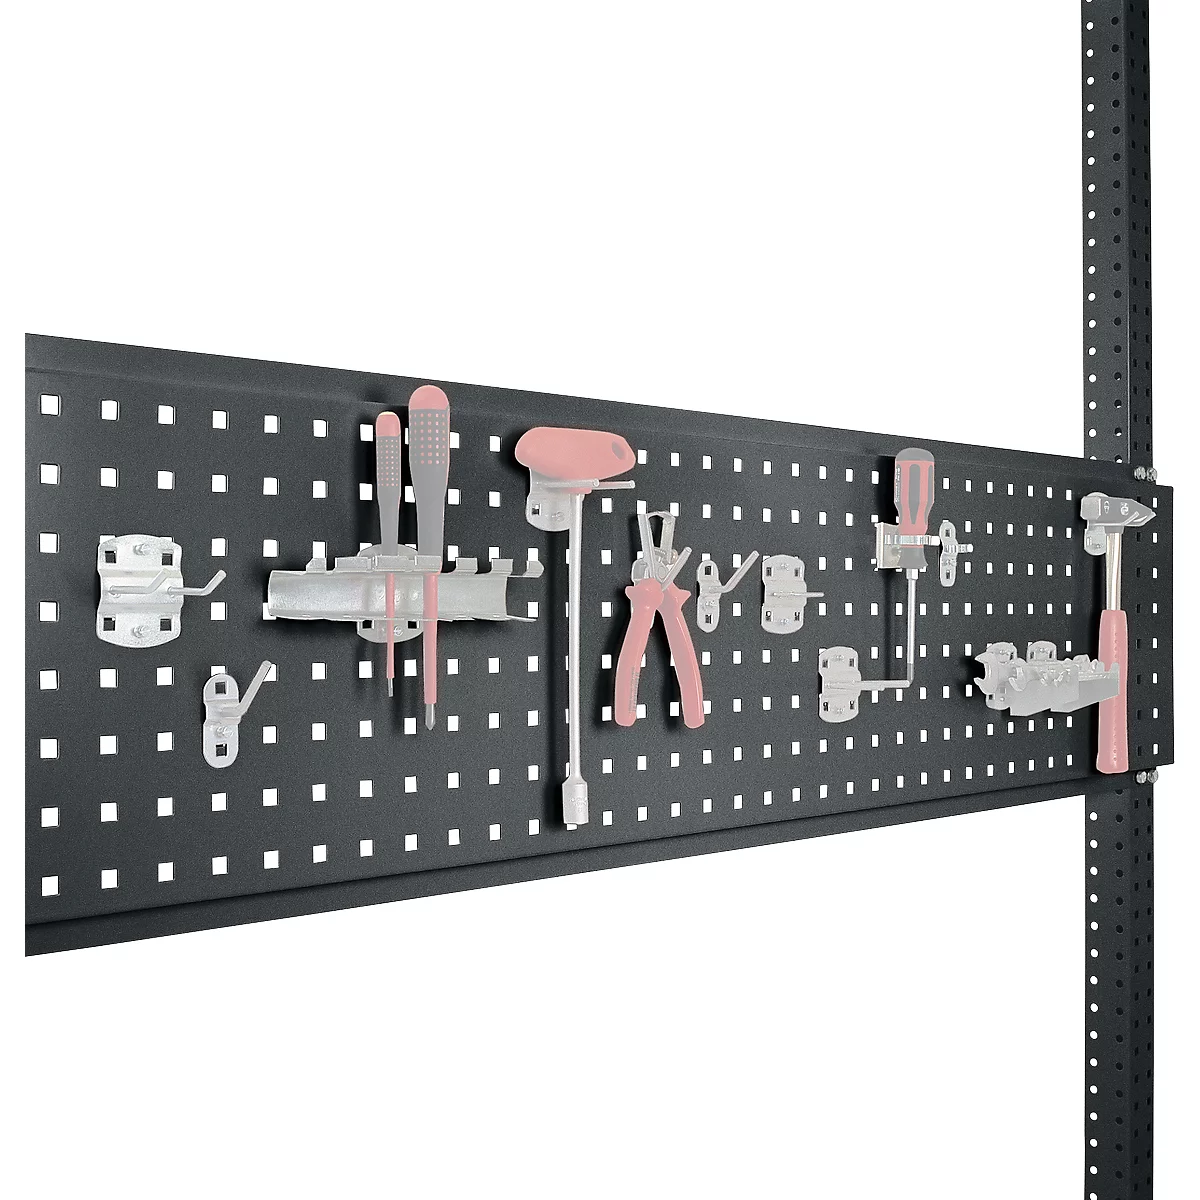 Placa perforada para herramientas, para anchura de mesa 1500 mm, para serie Universal/Profi, antracita RAL 7016